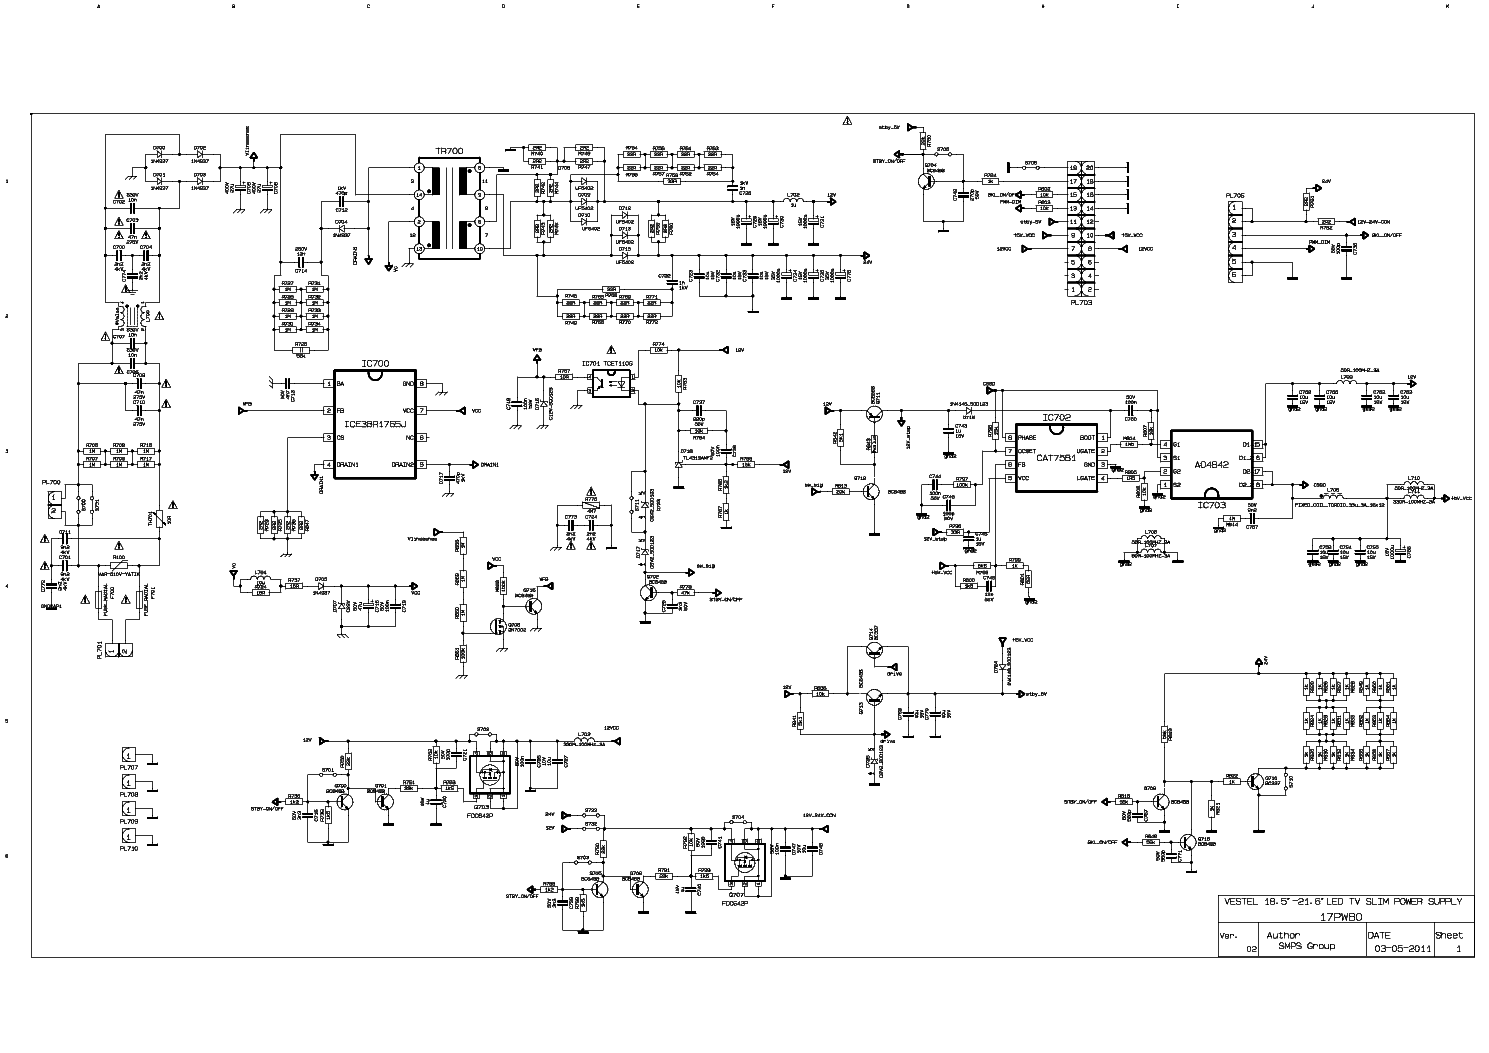 Samsung Led Tv Circuit Diagram Pdf - Circuit Diagram Images